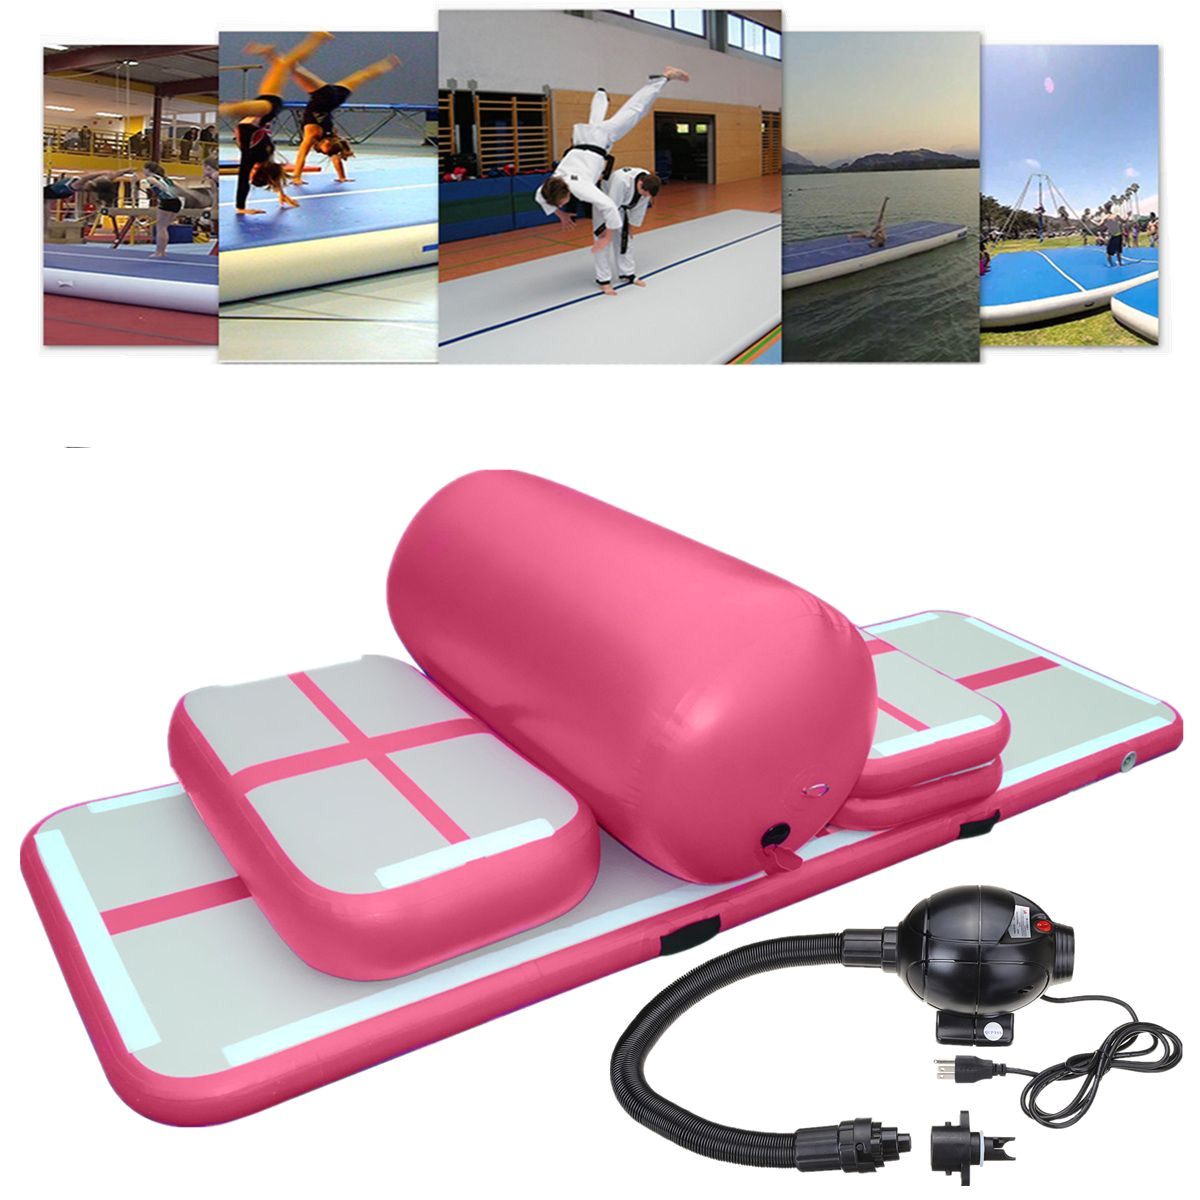 5pcs inflatable gymnastics practice air track floor tumbling pad exercise training mat set